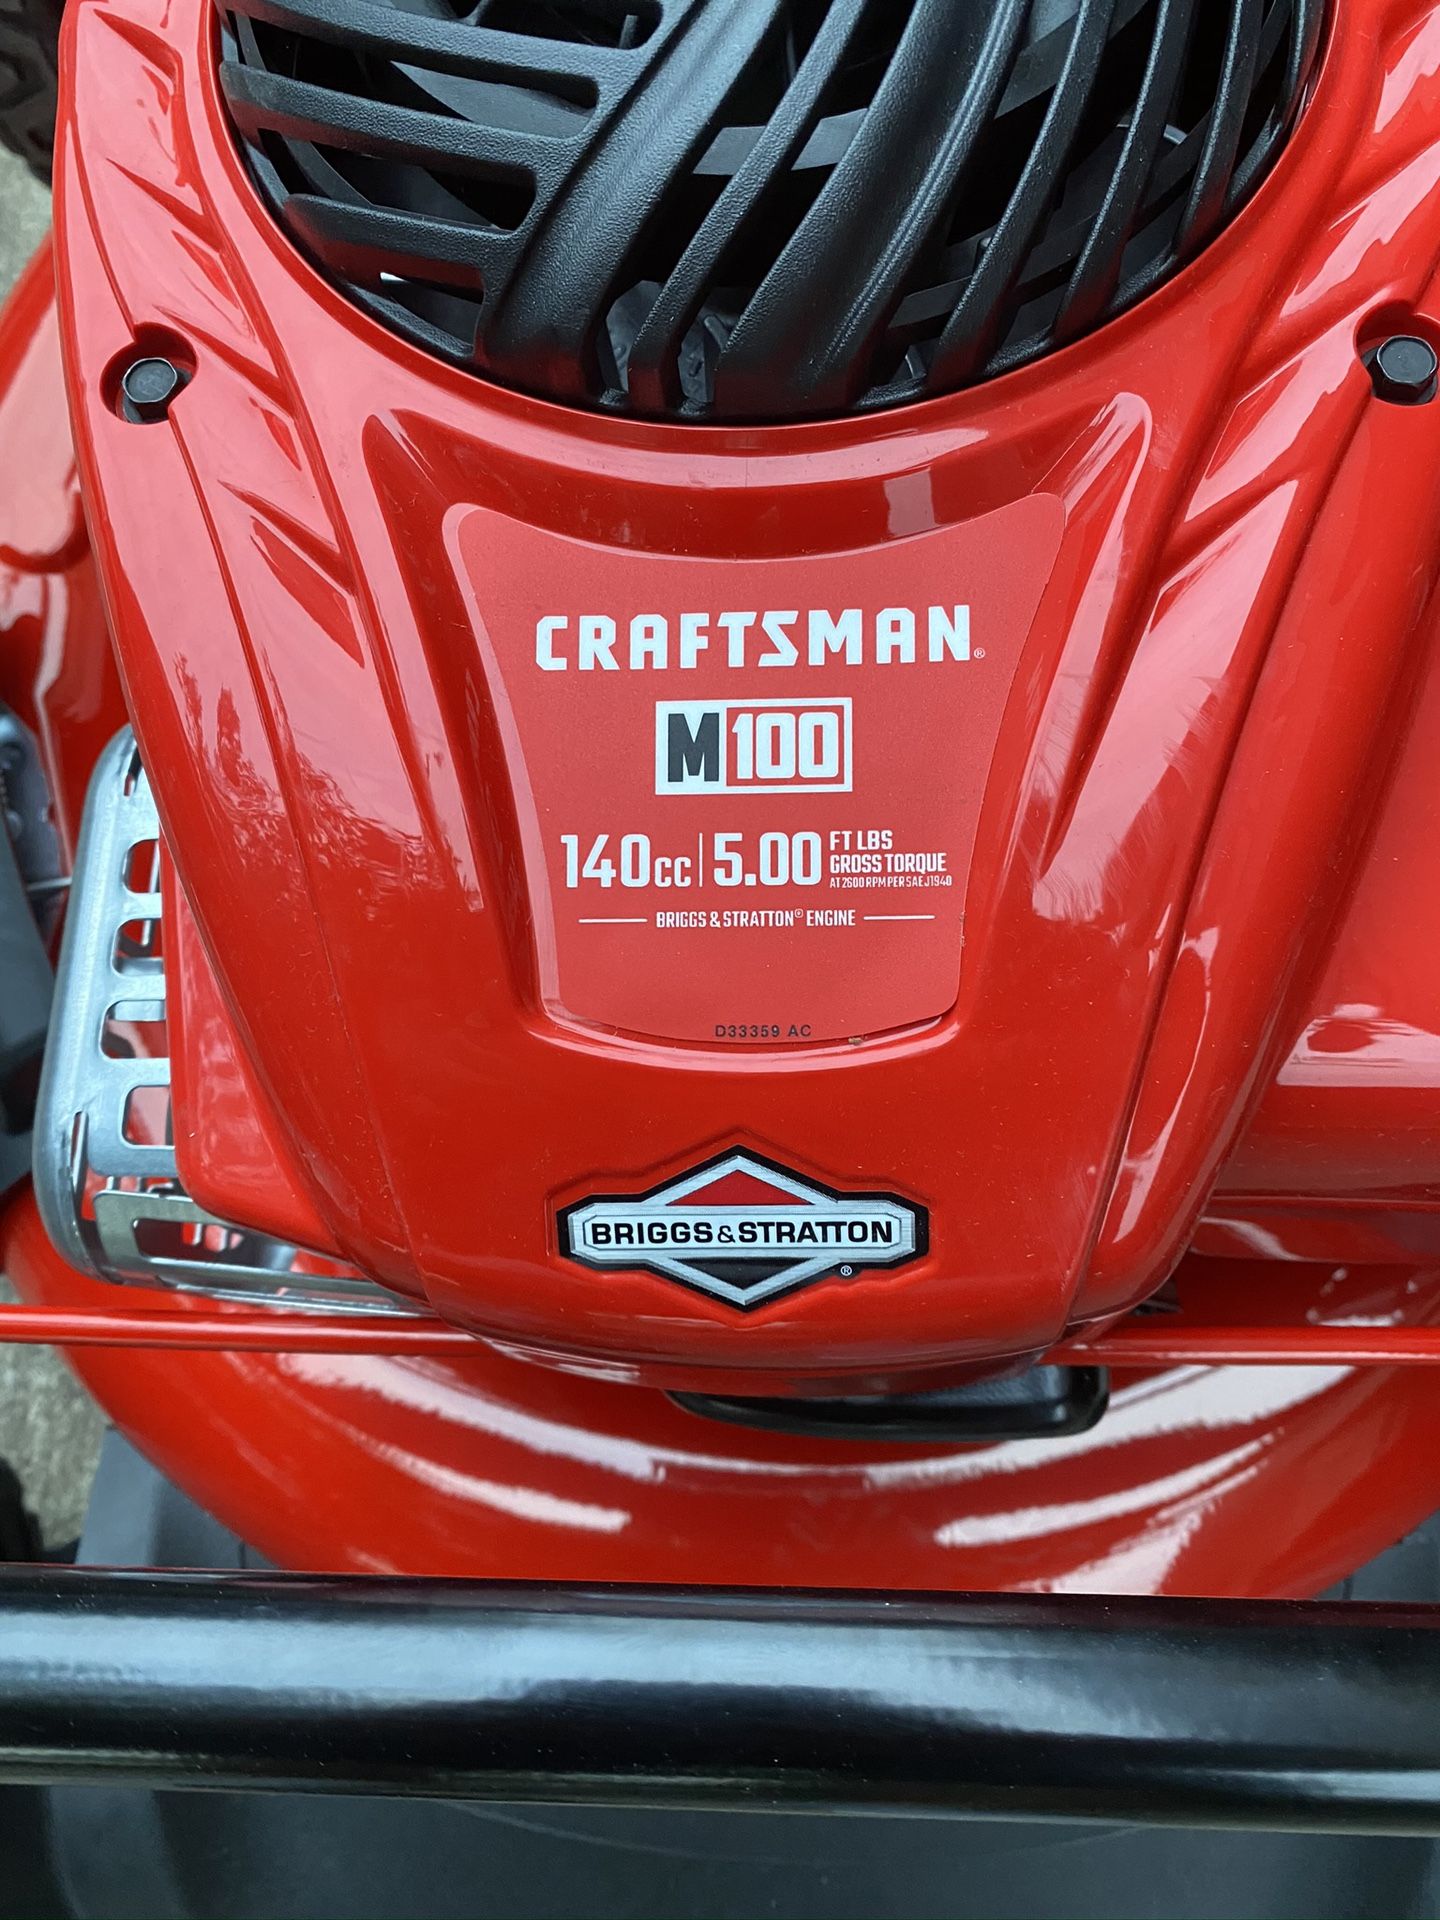 Craftsman M100 140cc 5.00 push mower